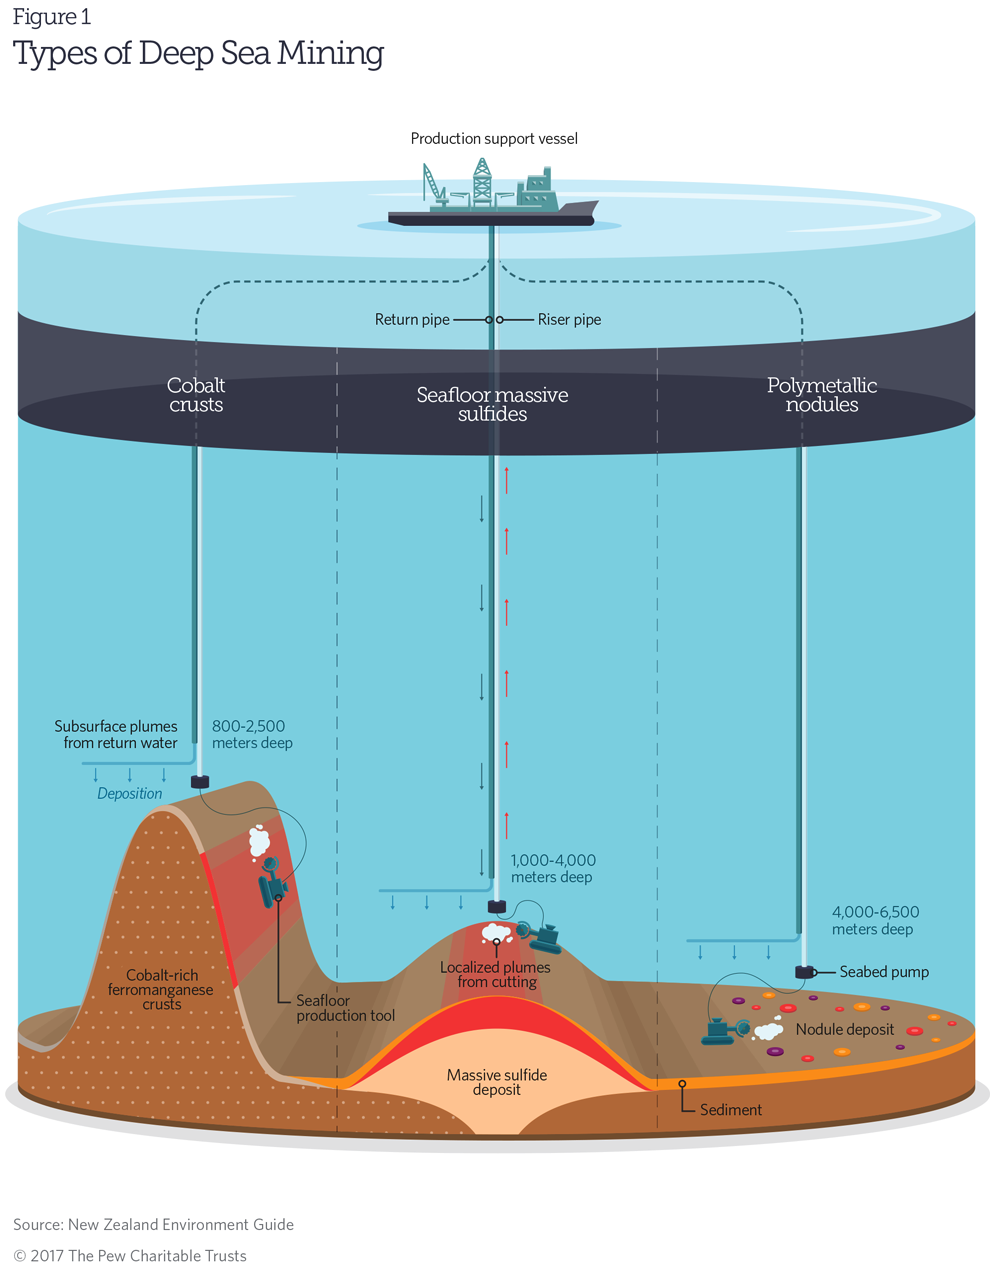 European Parliament Calls for a Moratorium on Deep-Sea Mining